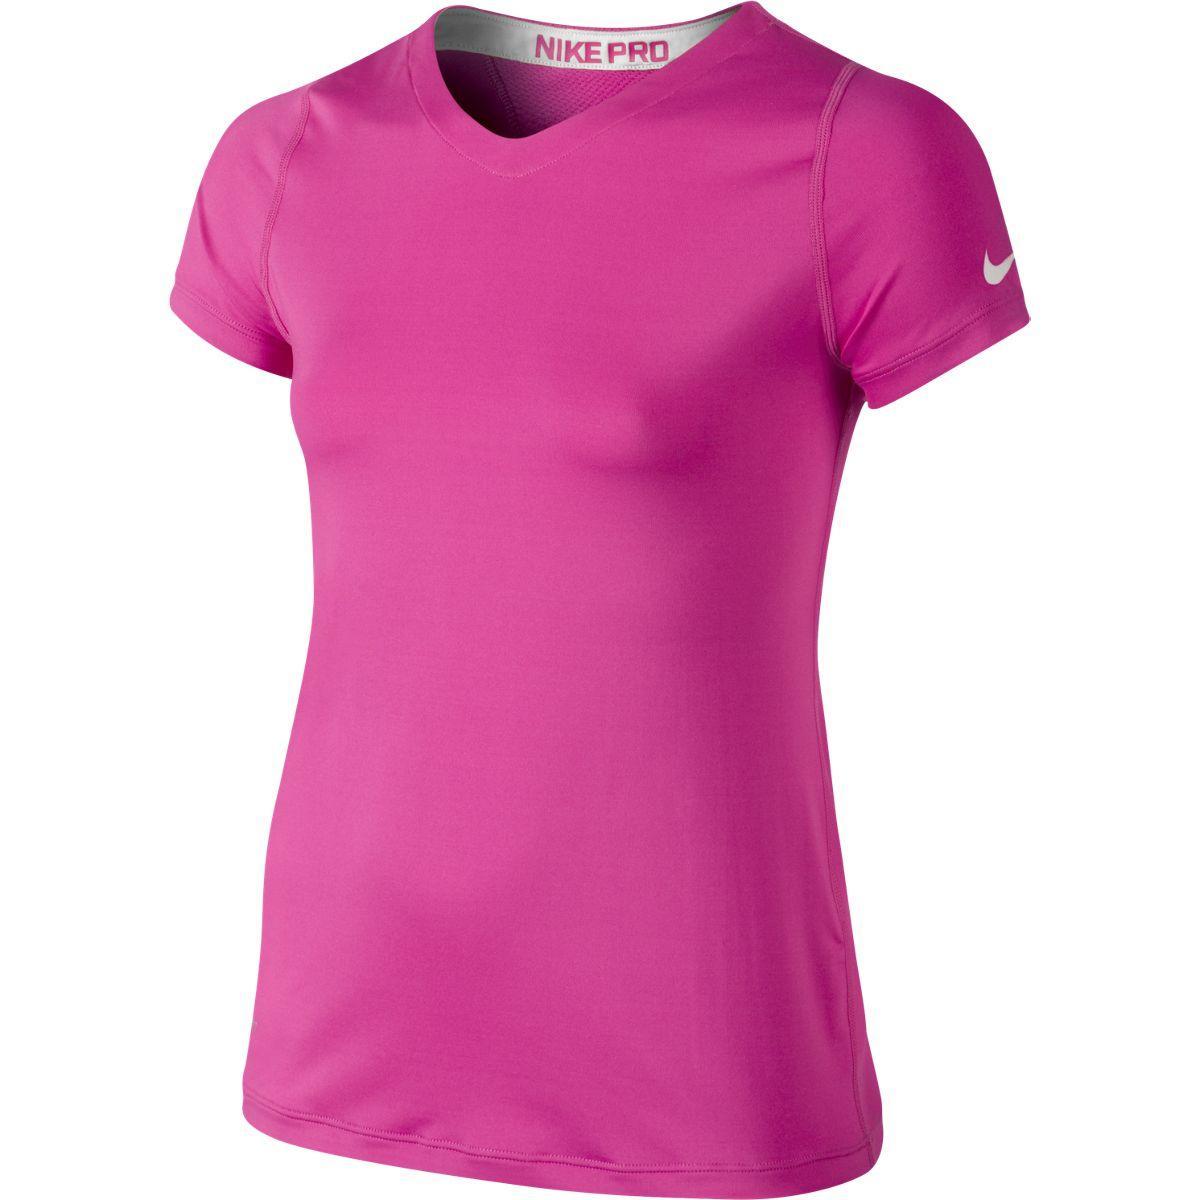 Nike Girls Pro Fitted Short Sleeve Top - Pink Pow - Tennisnuts.com